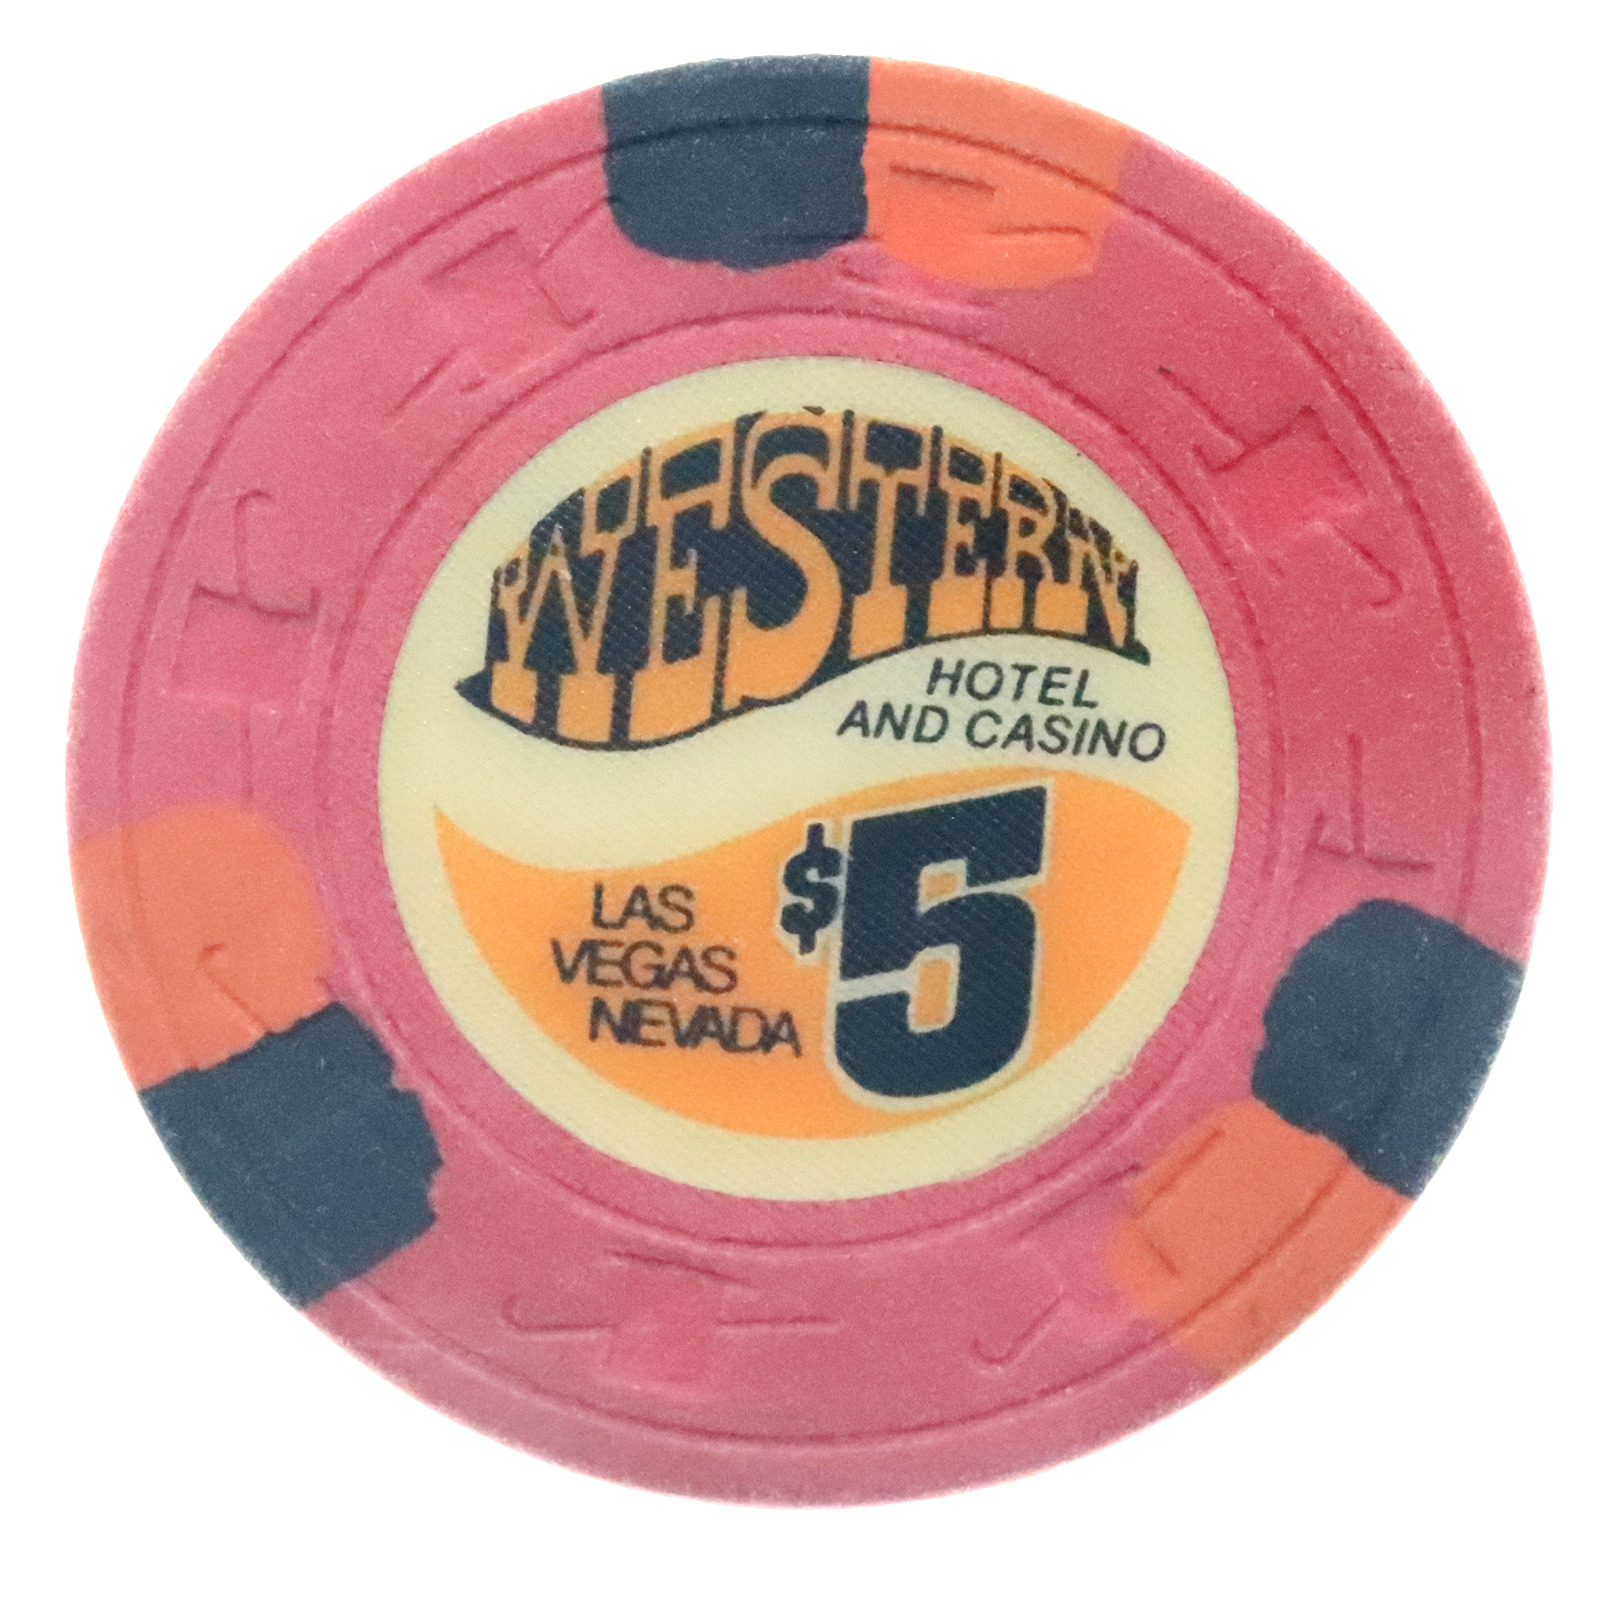 Western Hotel/Casino  - Las Vegas  - $5 Chip - 1971